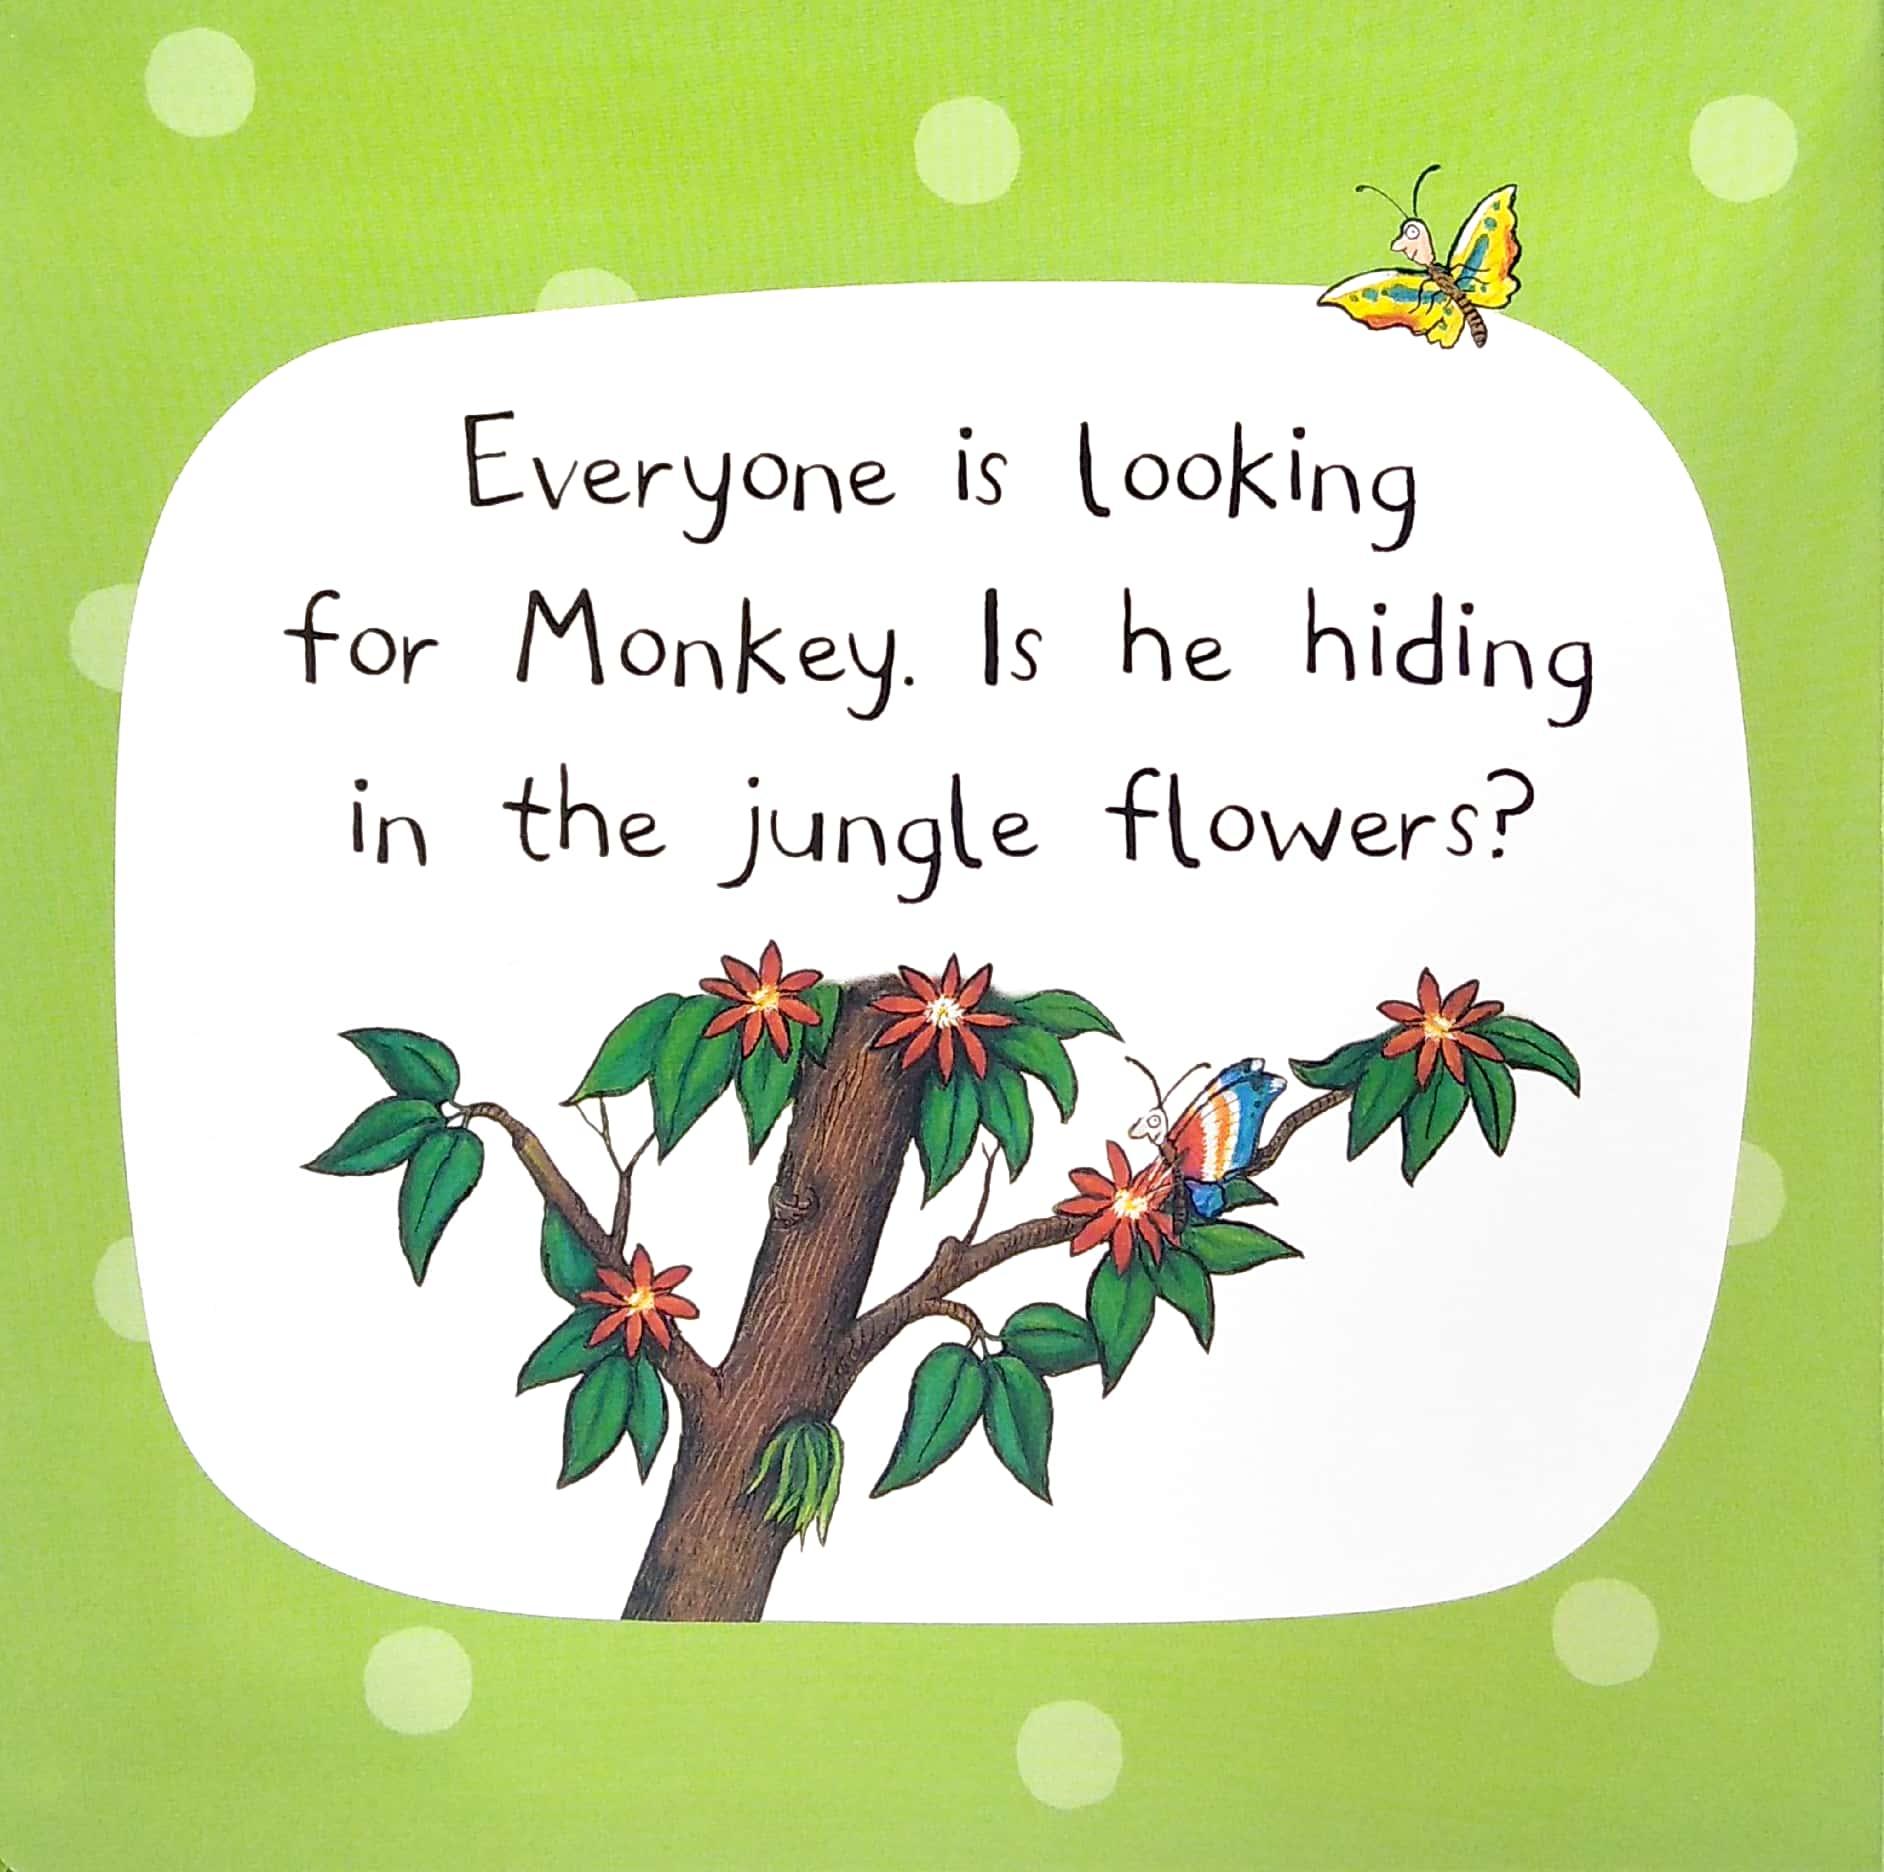 Who's Hiding In The Jungle?